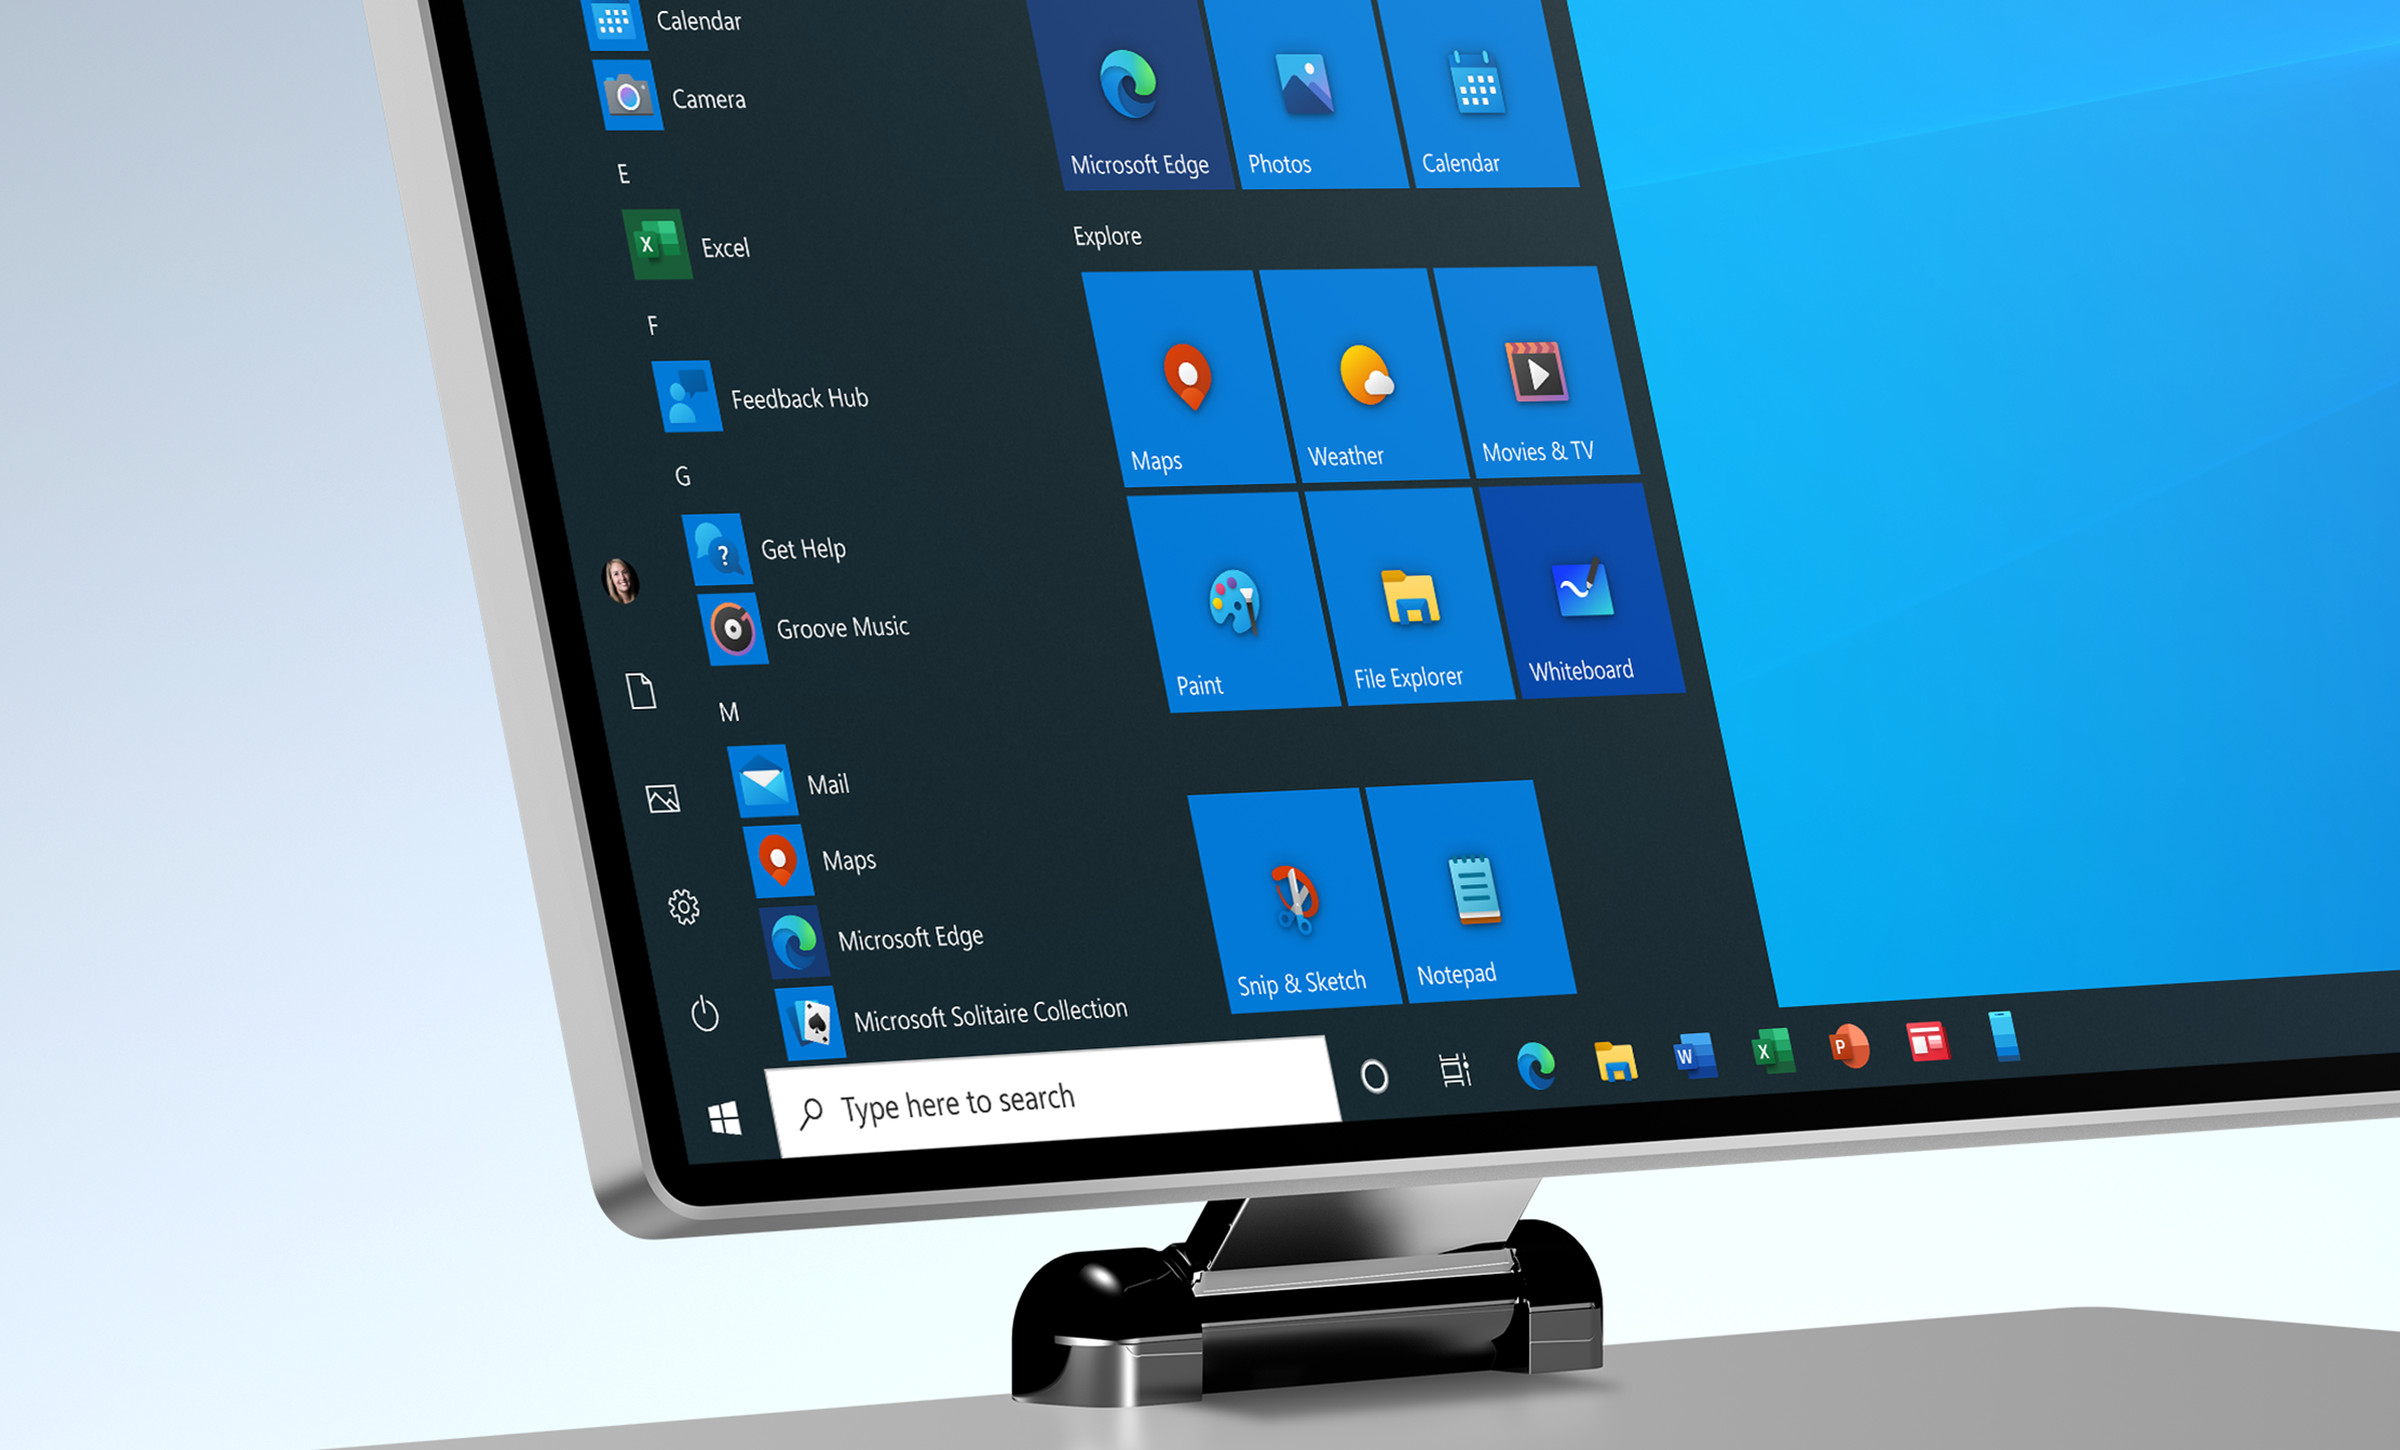 Windows 10’s new icons in the taskbar.